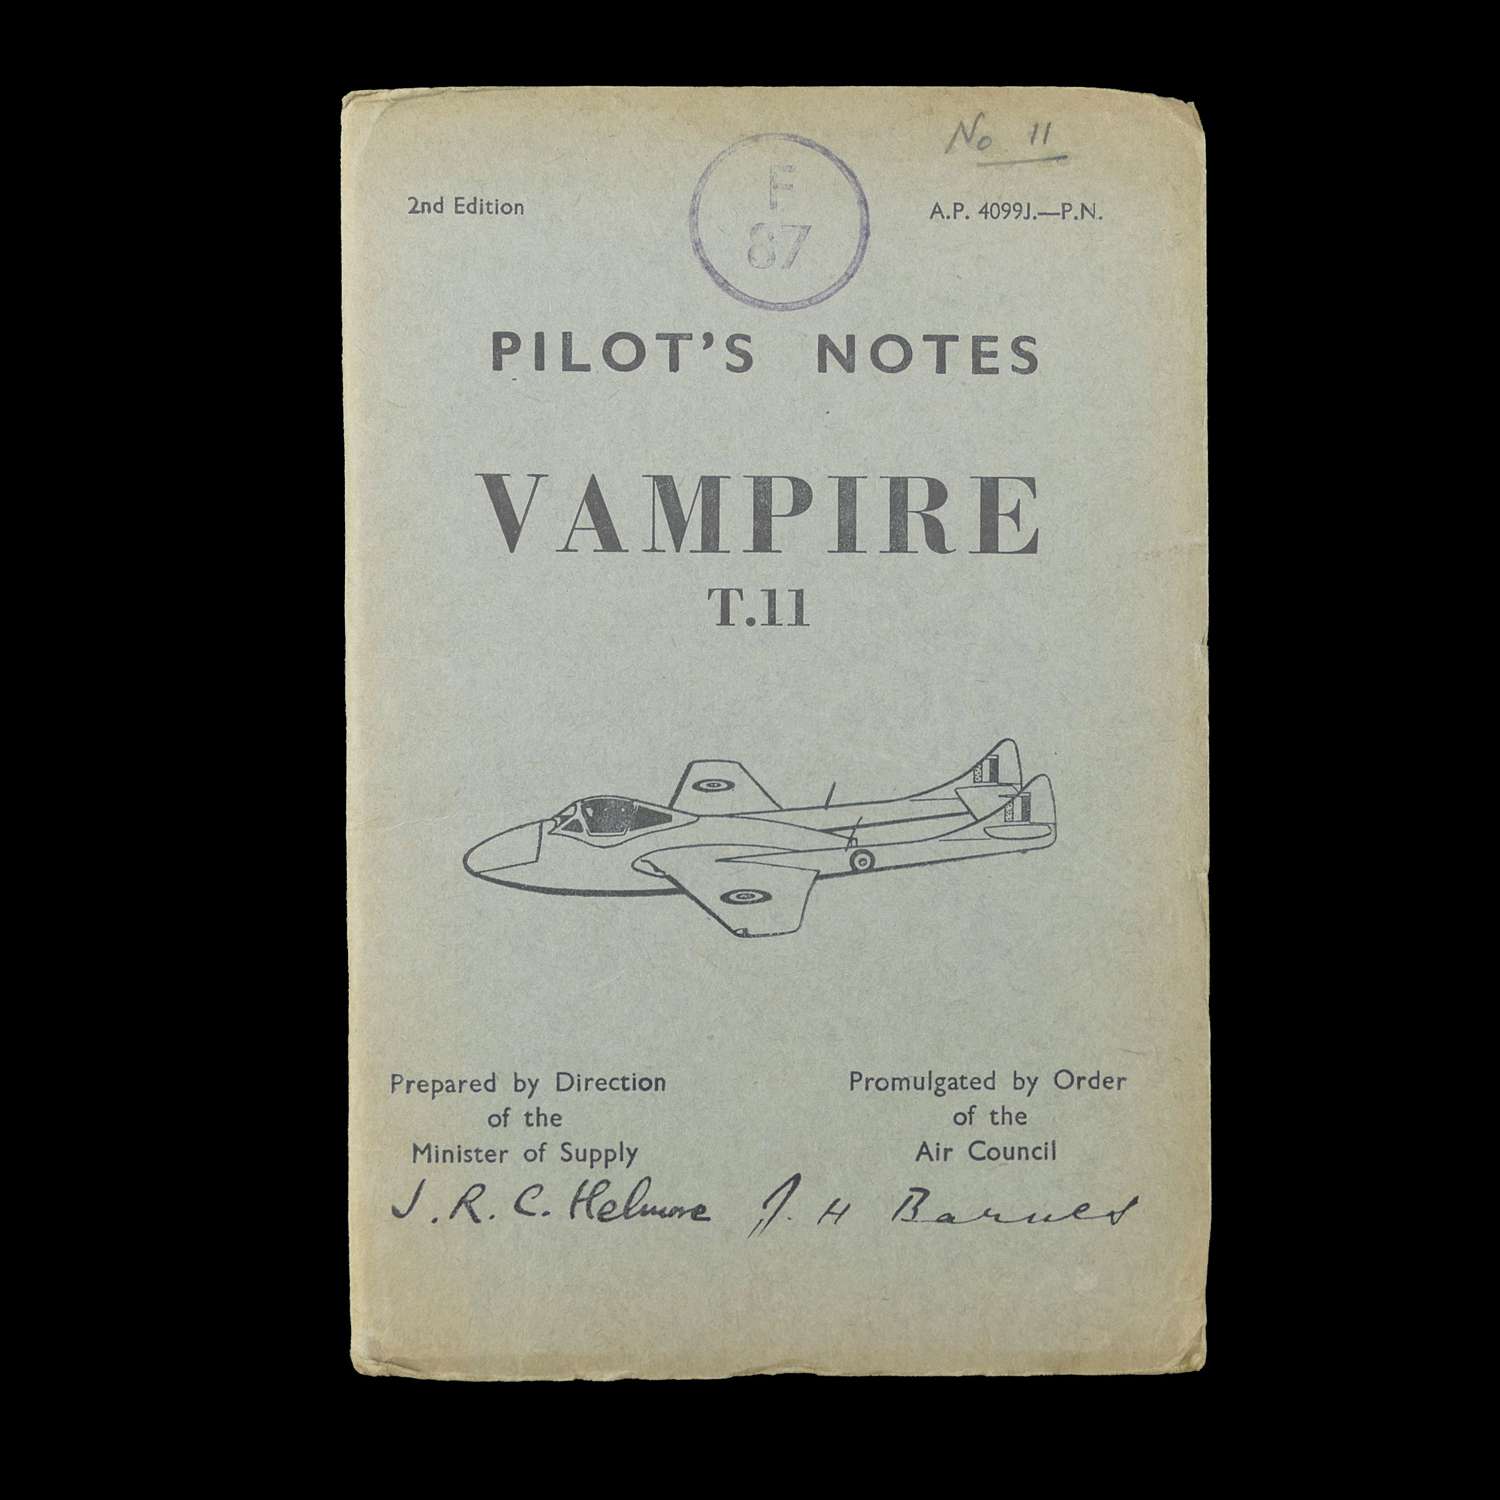 RAF pilot's notes - Vampire T.11